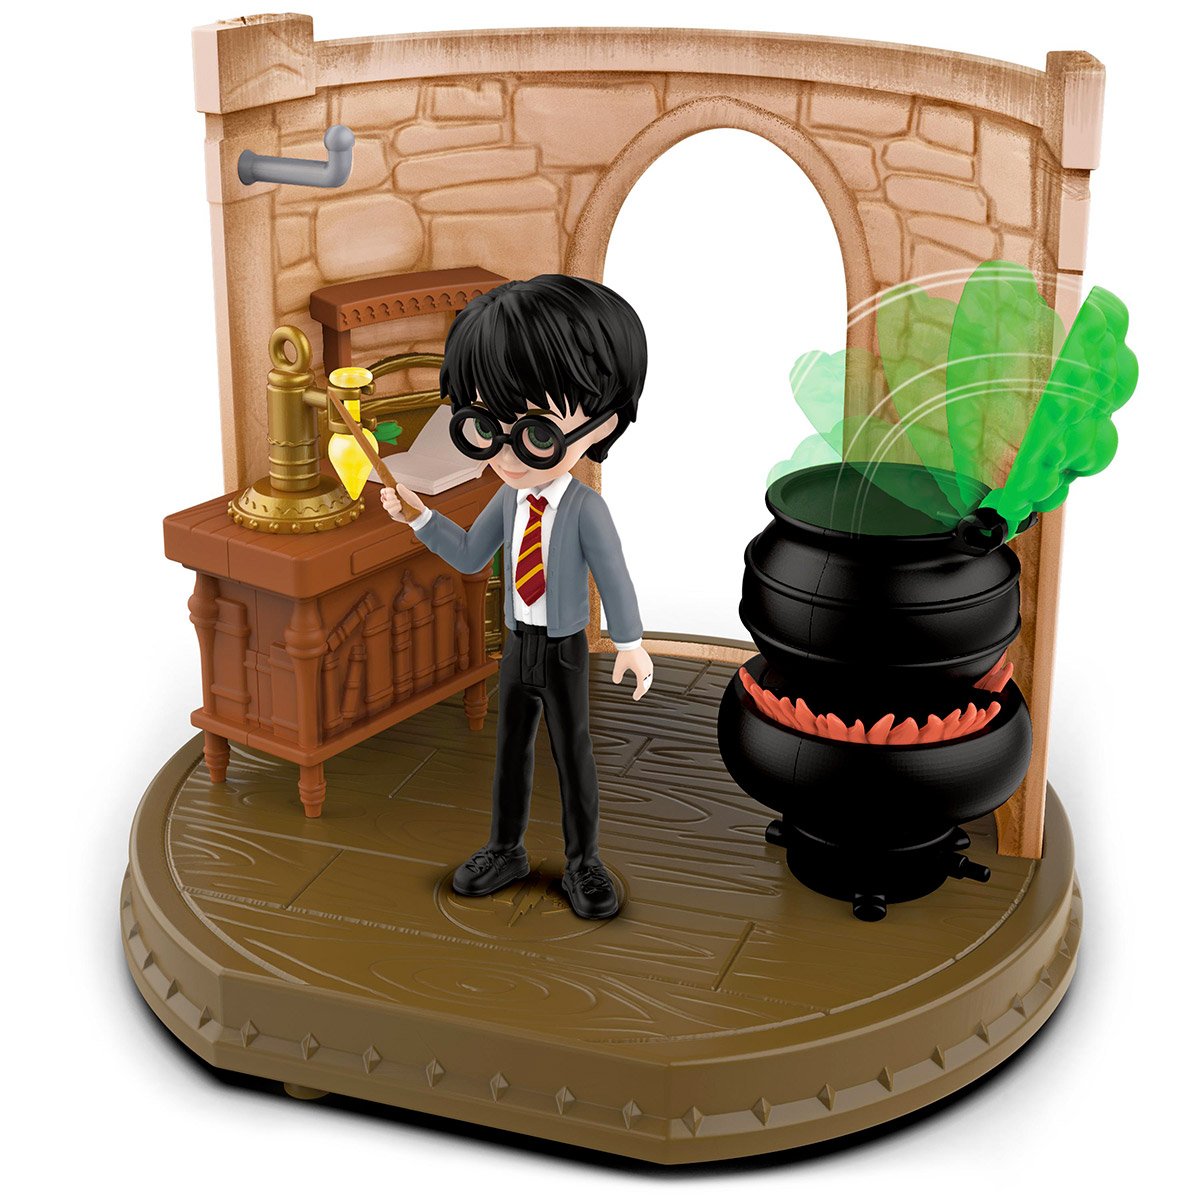 Cours De Potion Playset Figurine Harry Potter - N/A - Kiabi - 24.99€